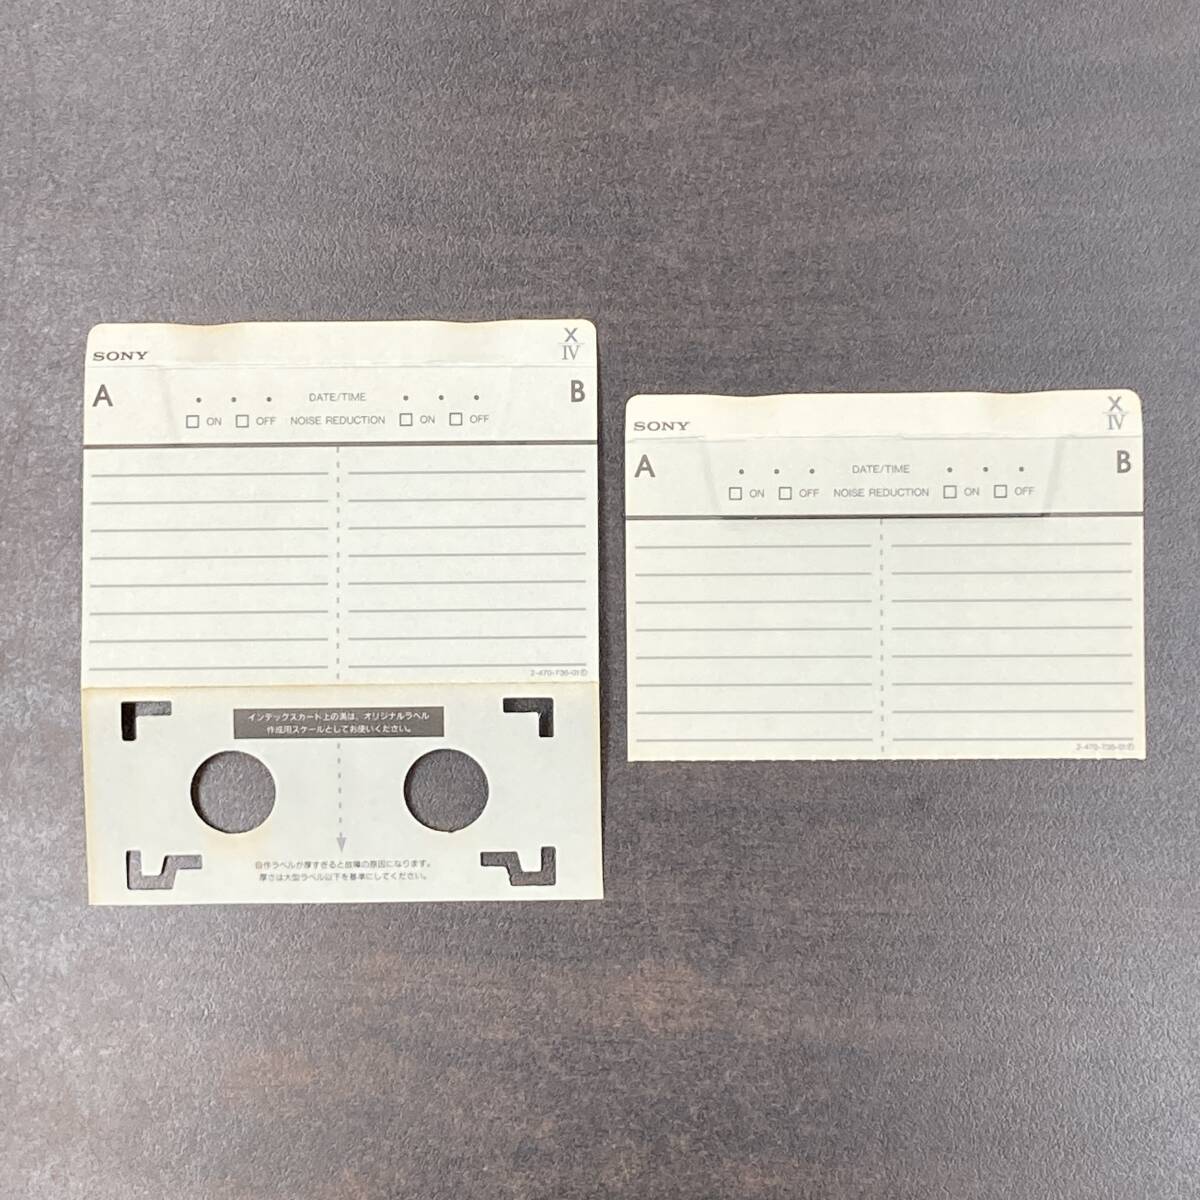 1994BT ソニー XIV 46 54分 メタル 2本 カセットテープ/Two SONY XIV 46 54 Type IV Metal Position Audio Cassette_画像4